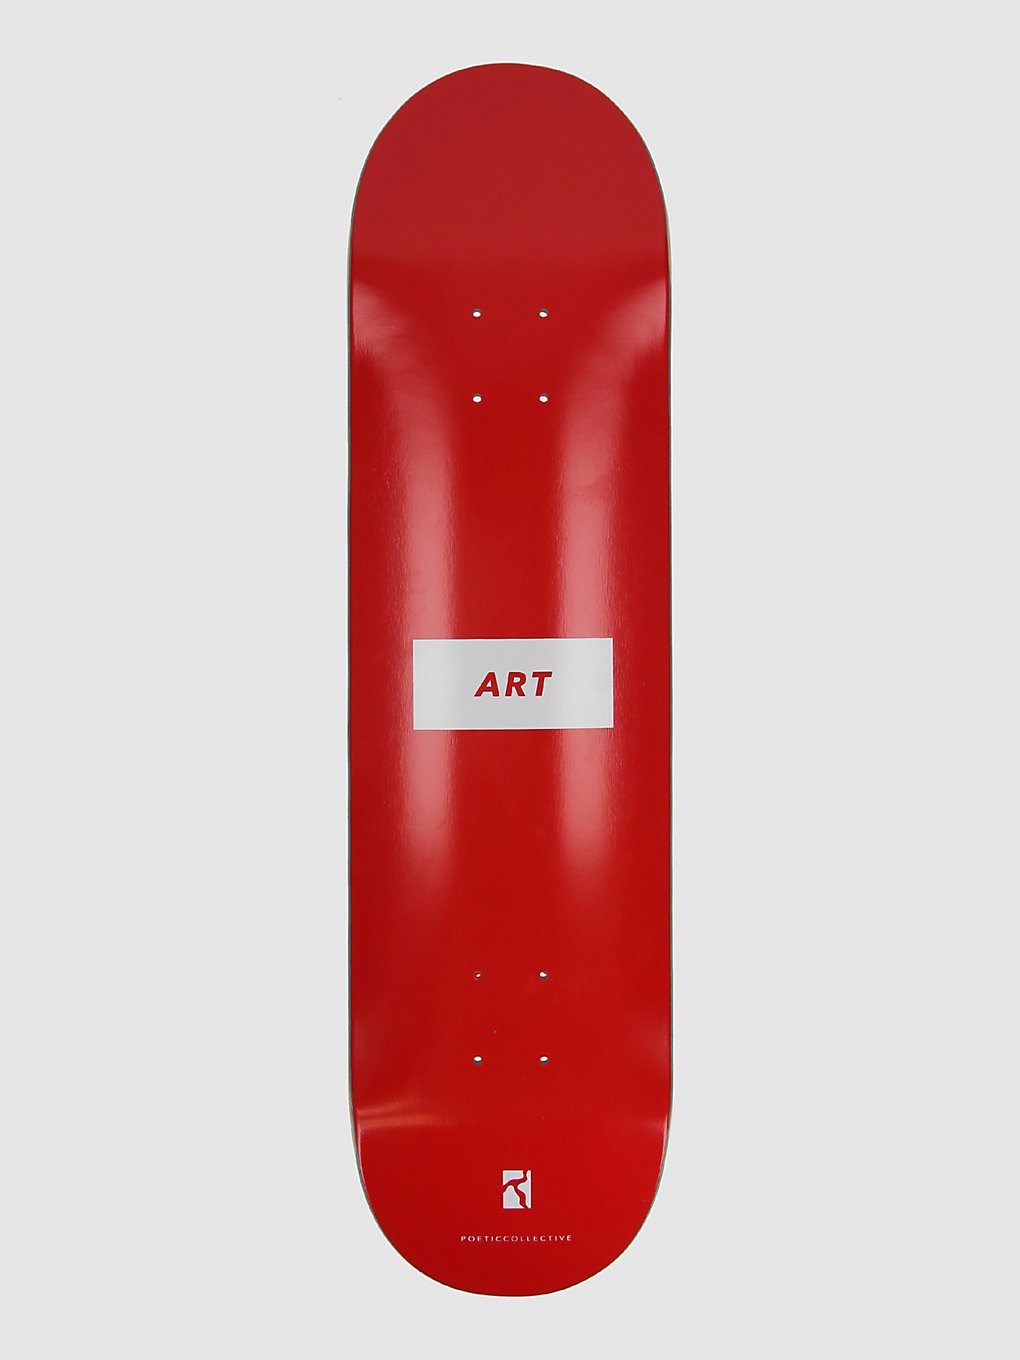 Poetic Collective Art 8.0" Skateboard Deck red kaufen